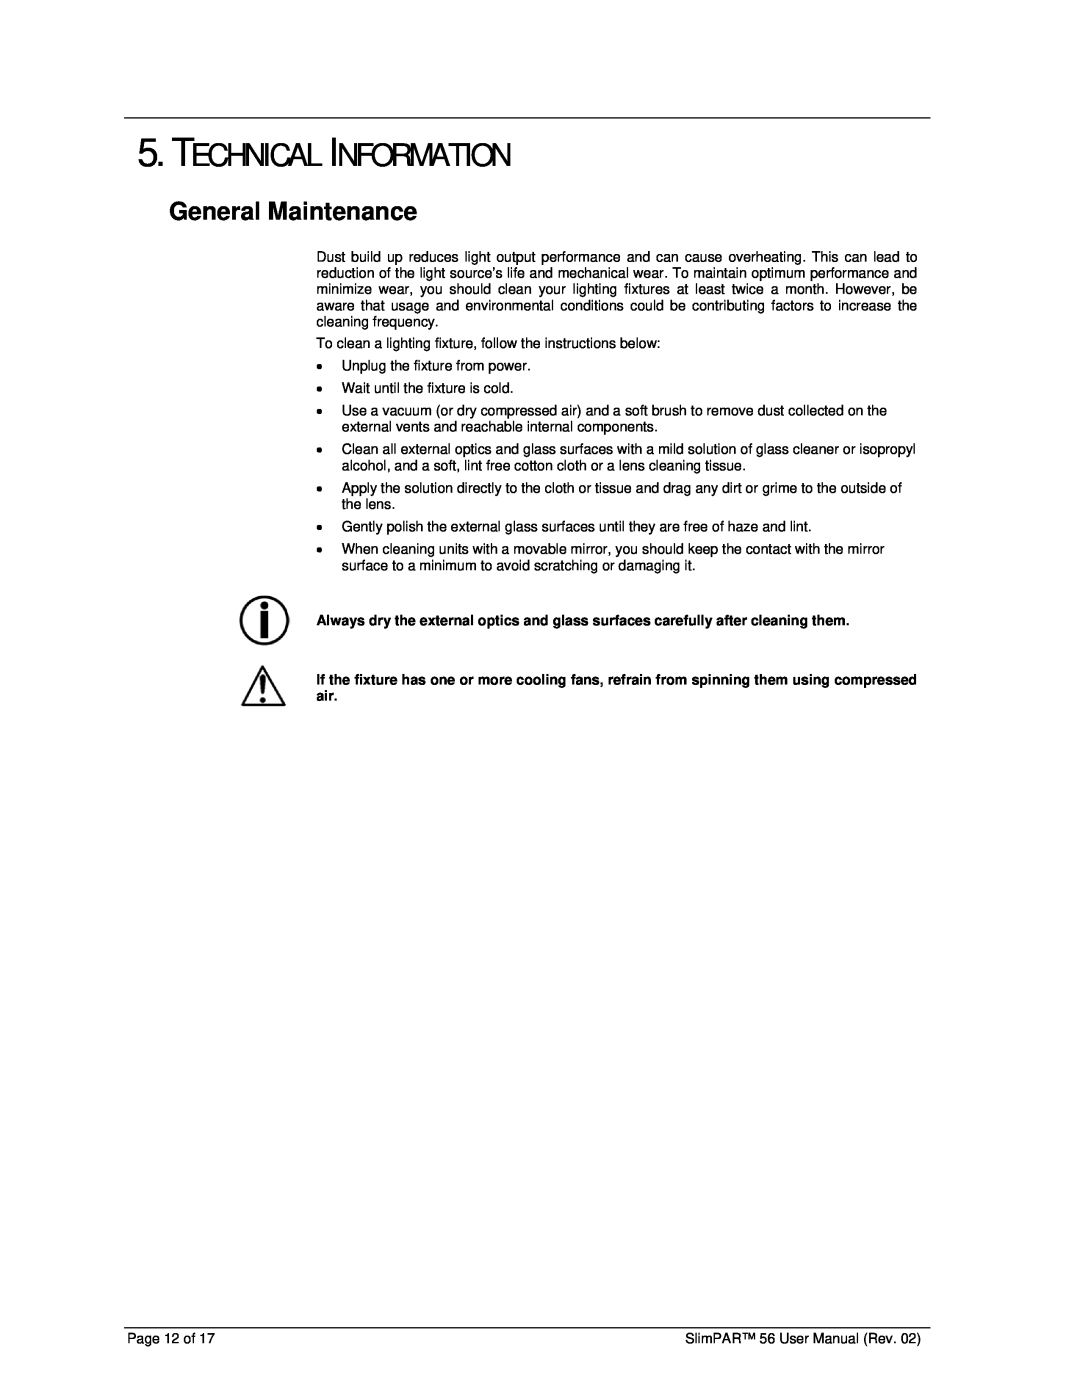 Chauvet 56 user manual Technical Information, General Maintenance 